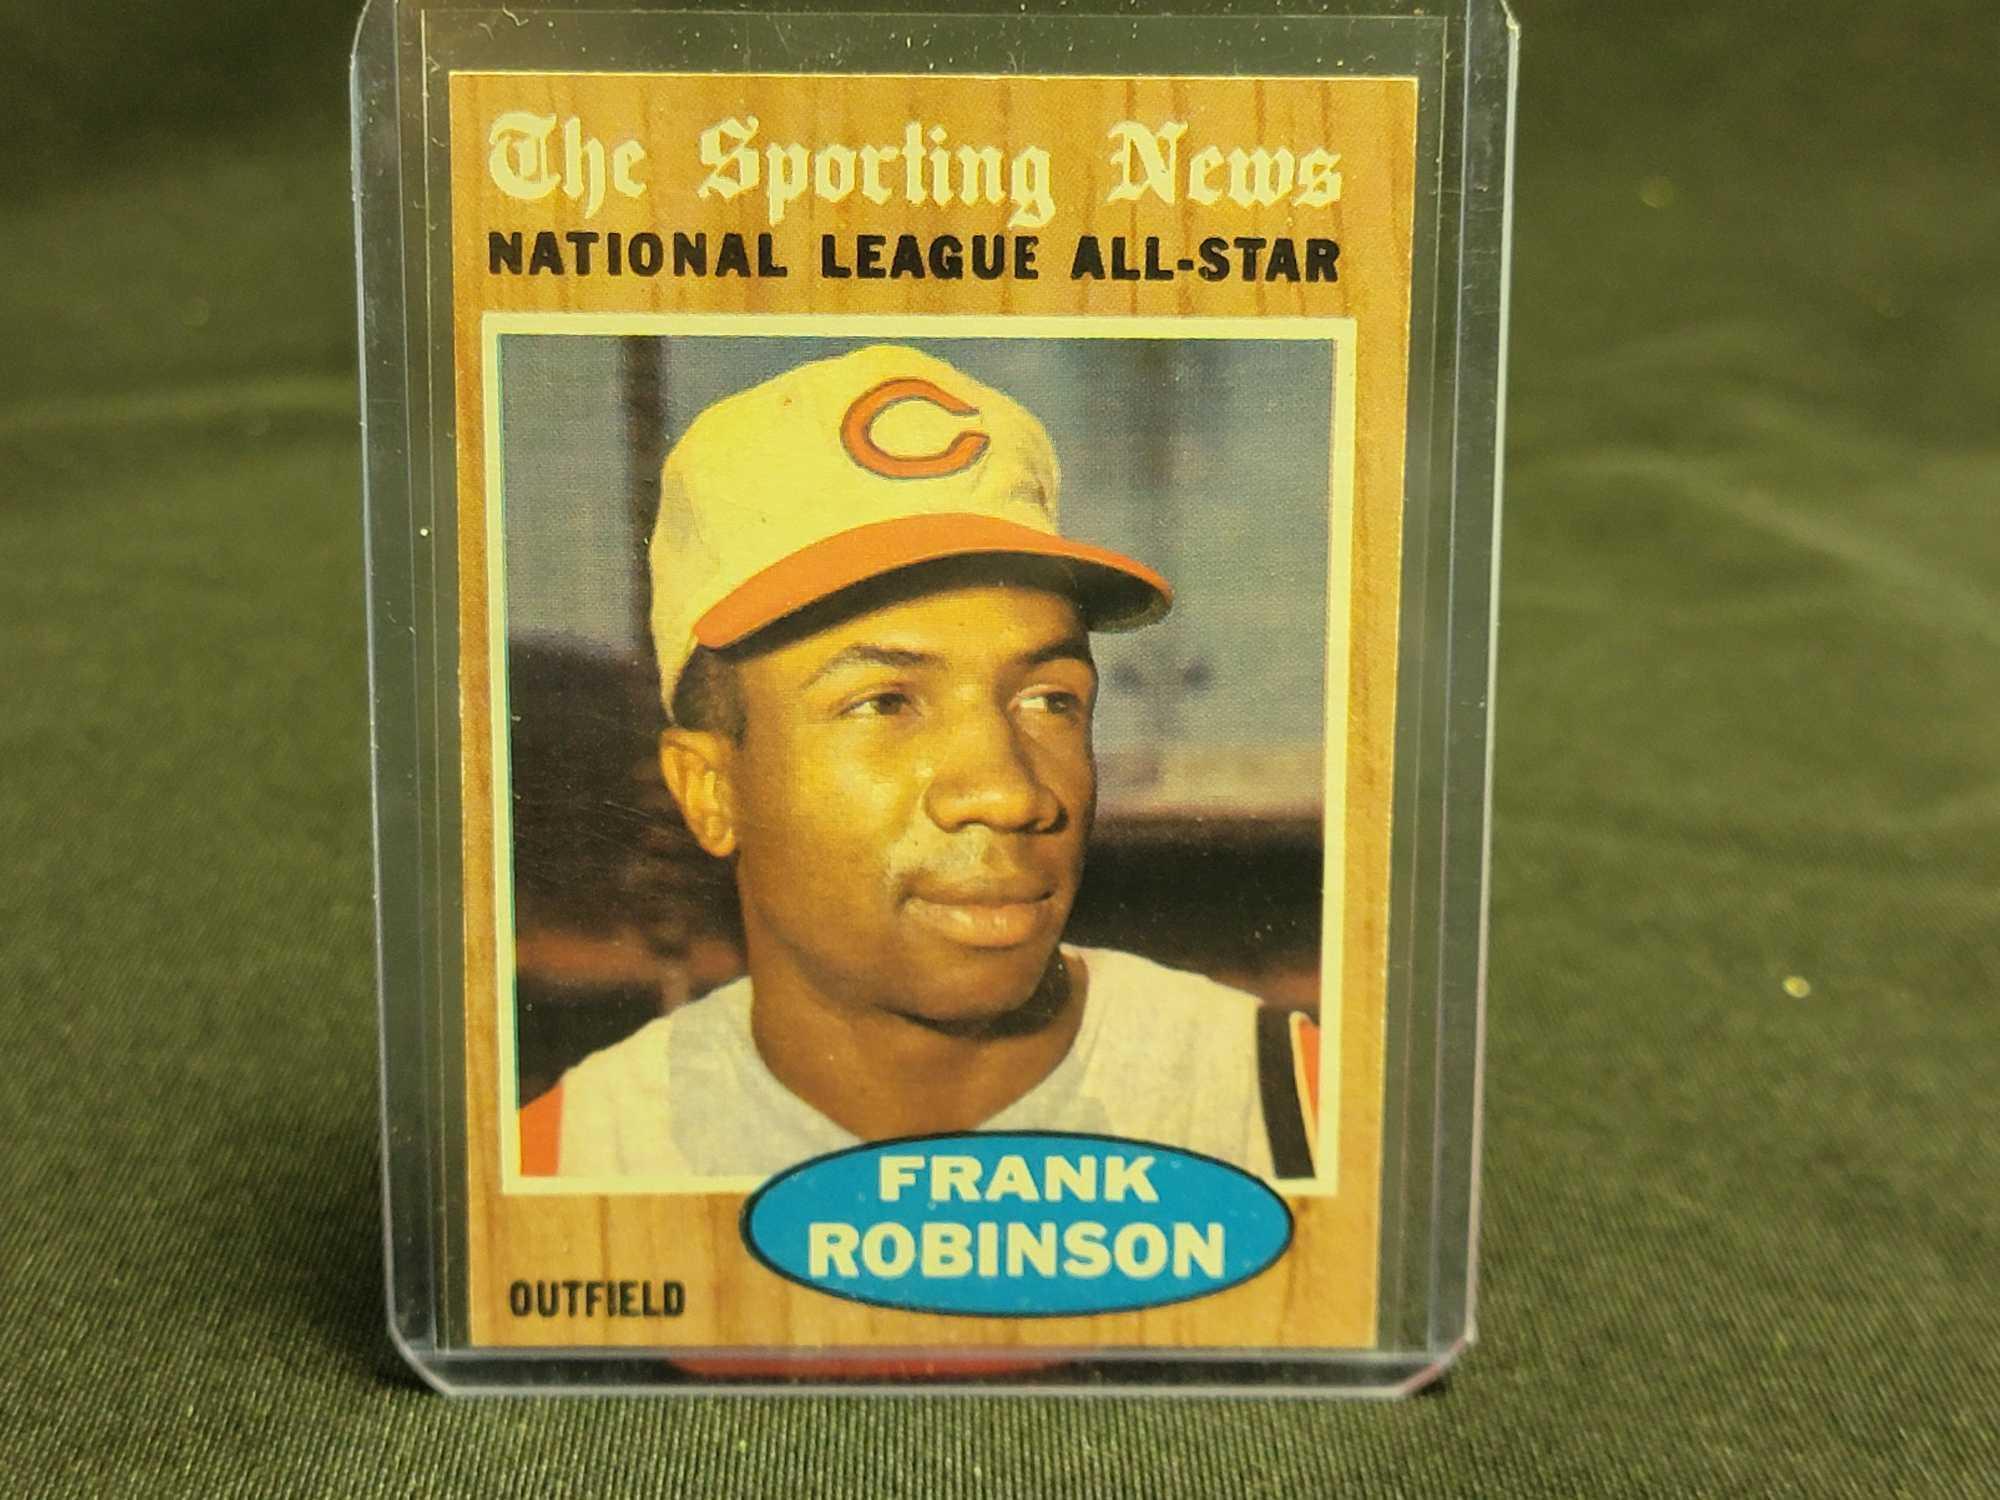 1962 Topps Frank Robinson All-Star 1964 Topps Card both NICE